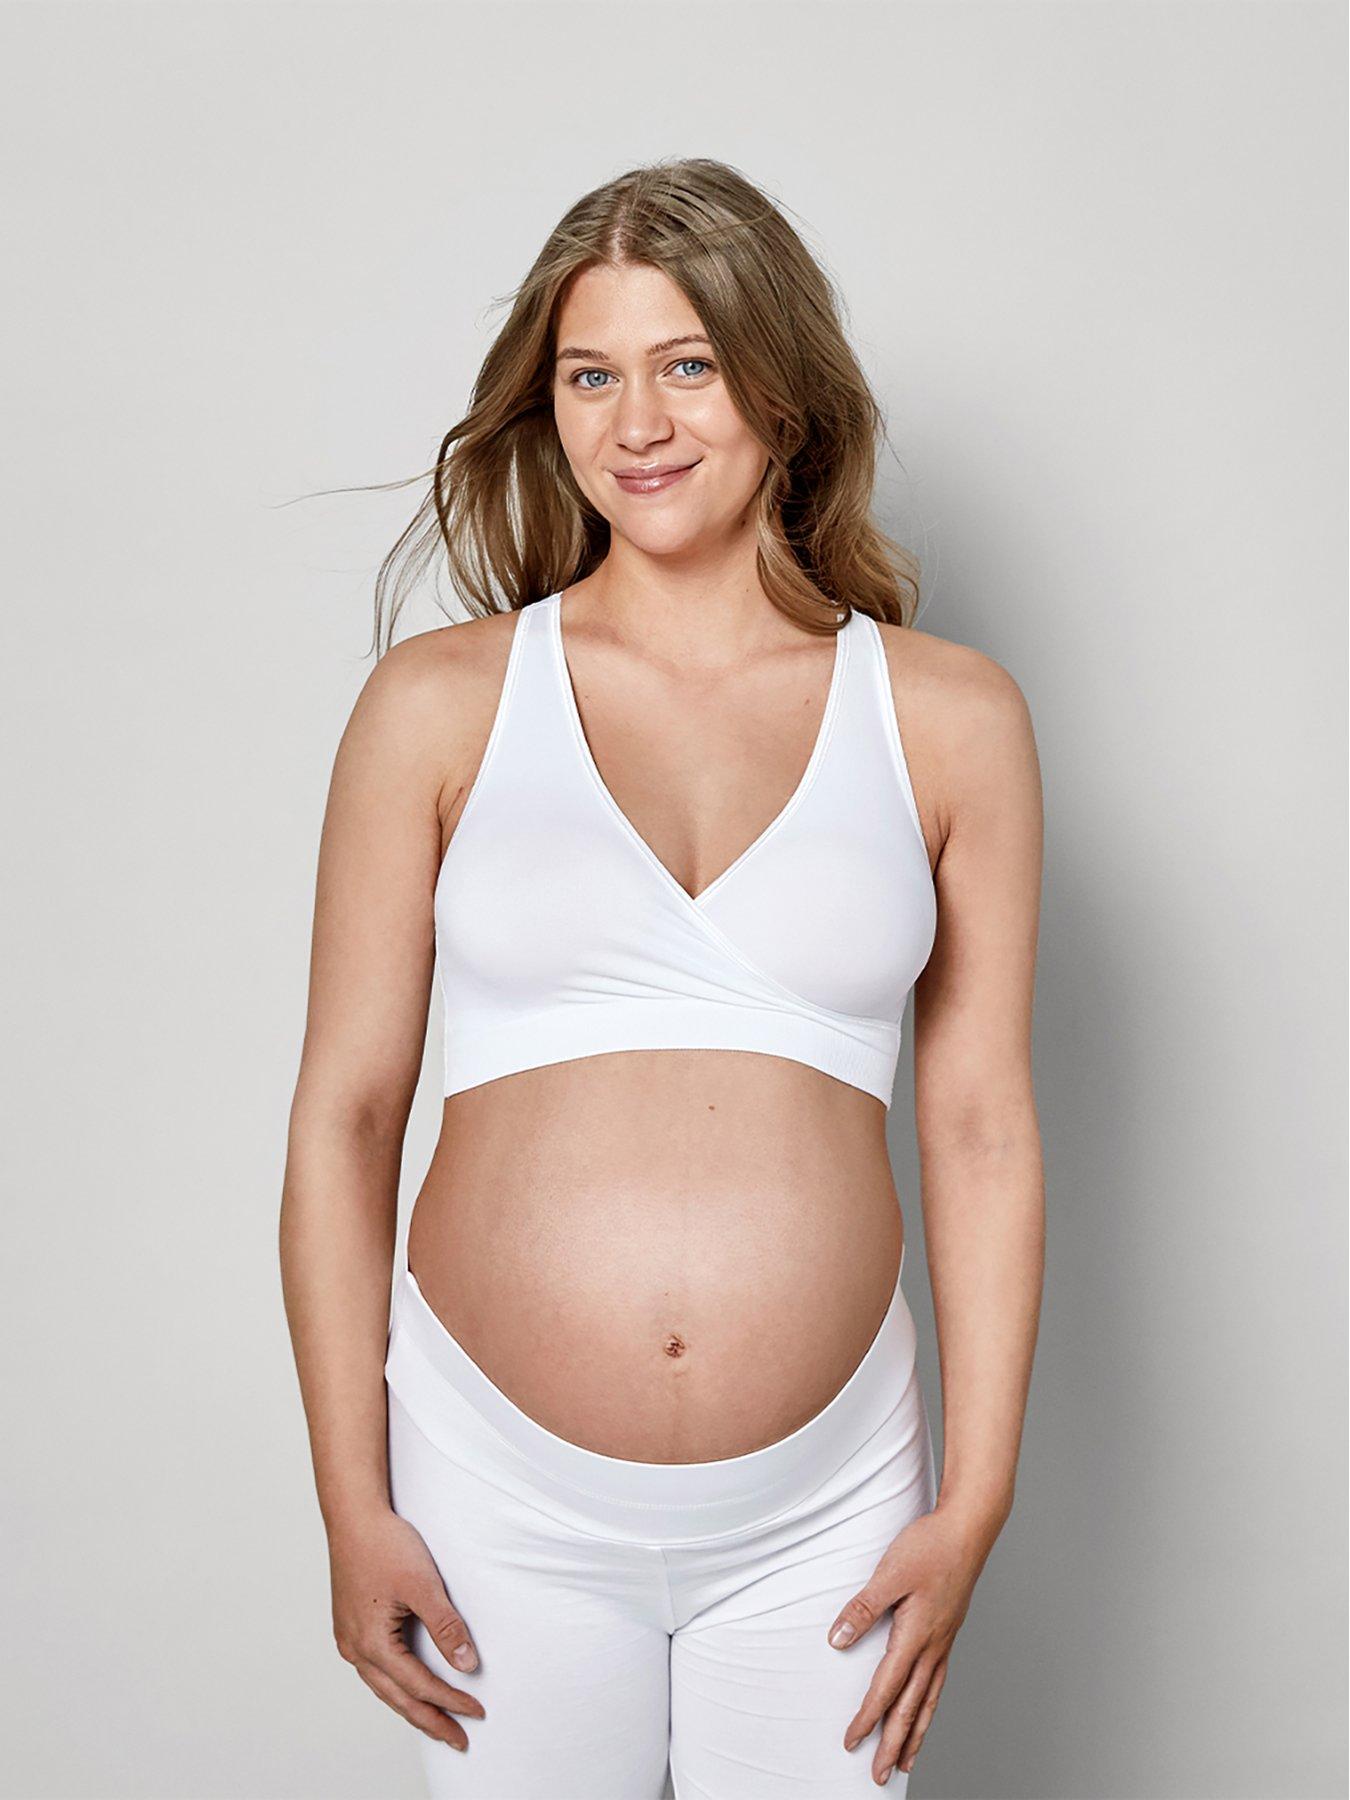 Wave Fashion Women's Maternity Button Front Nursing Bra Comfy